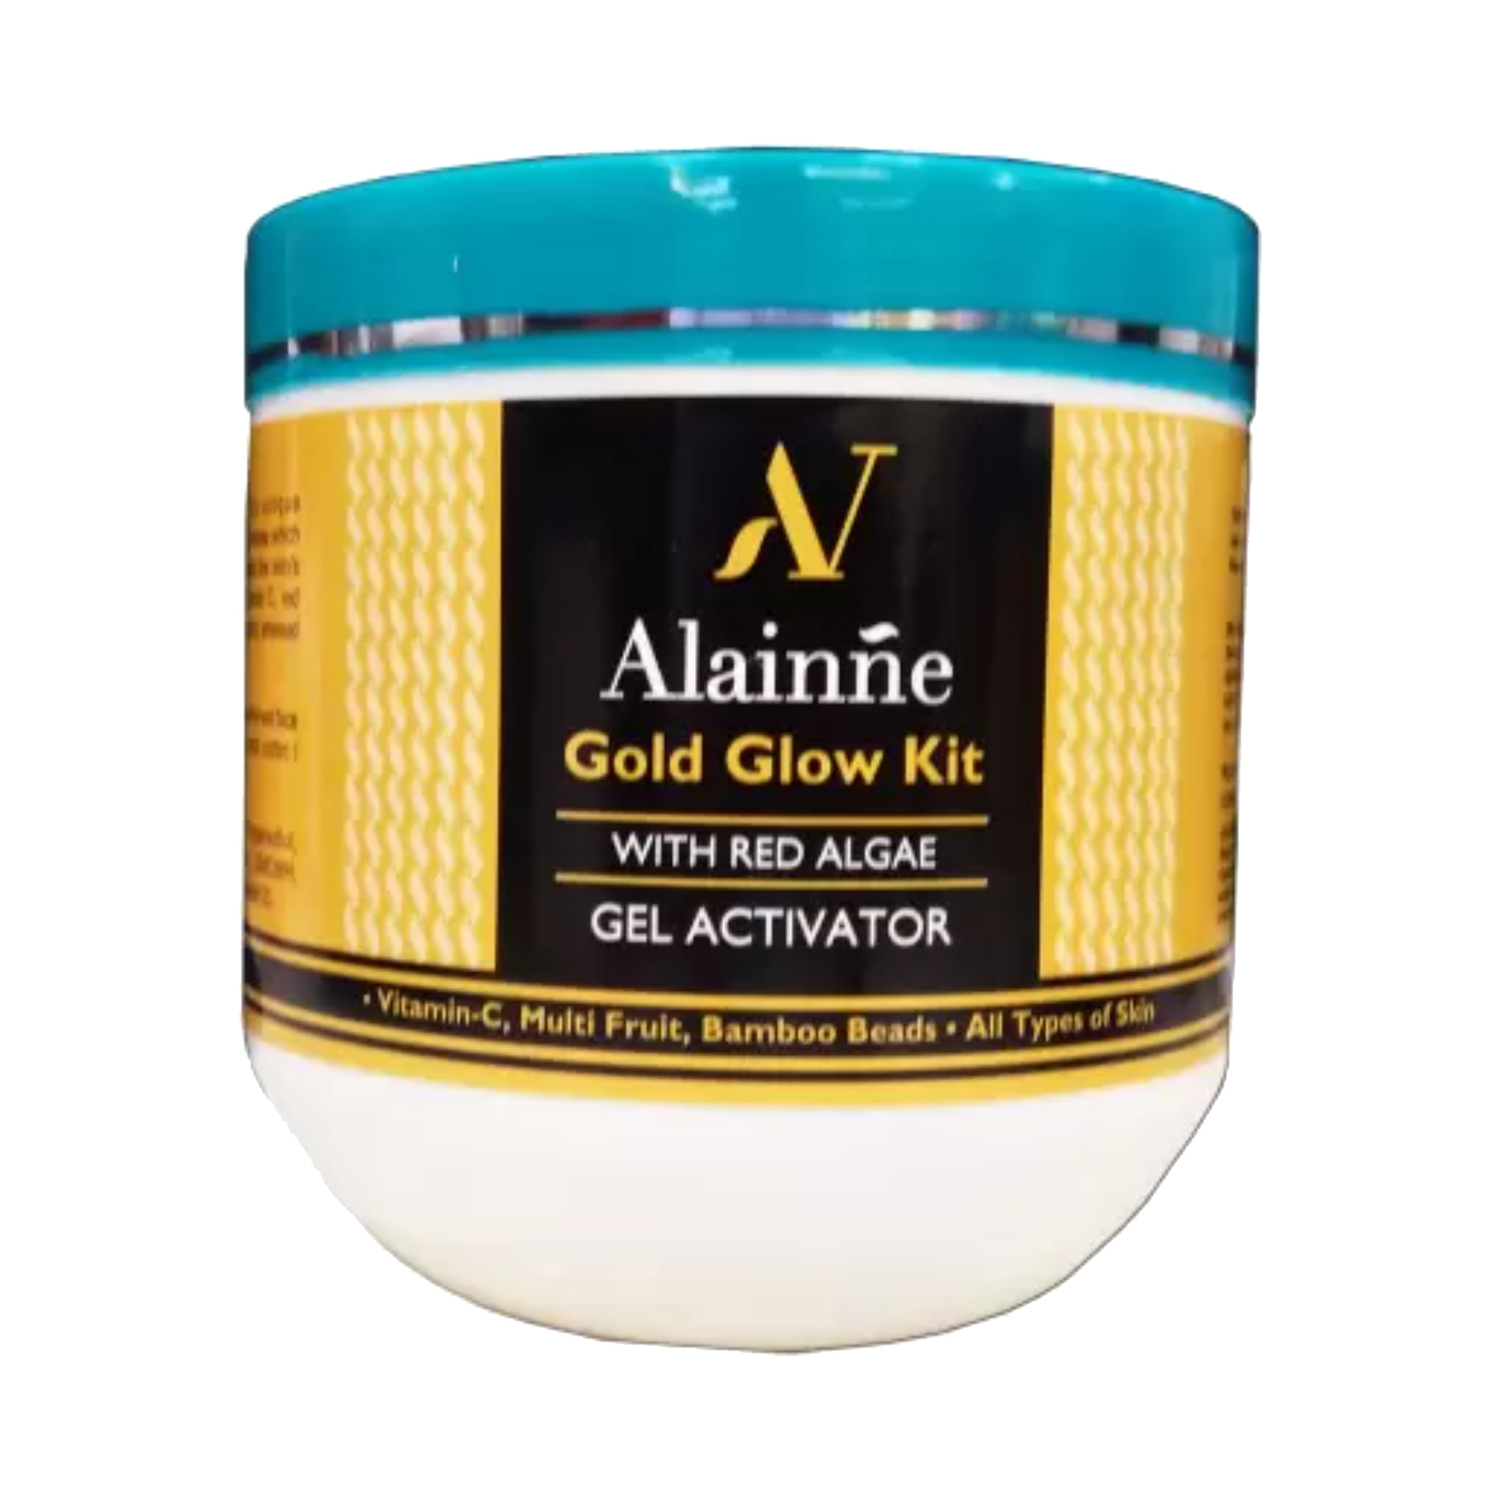 Alainne | Alainne Gold Glow Kit With Red Algae Step-2 Gel Activator - (500g)